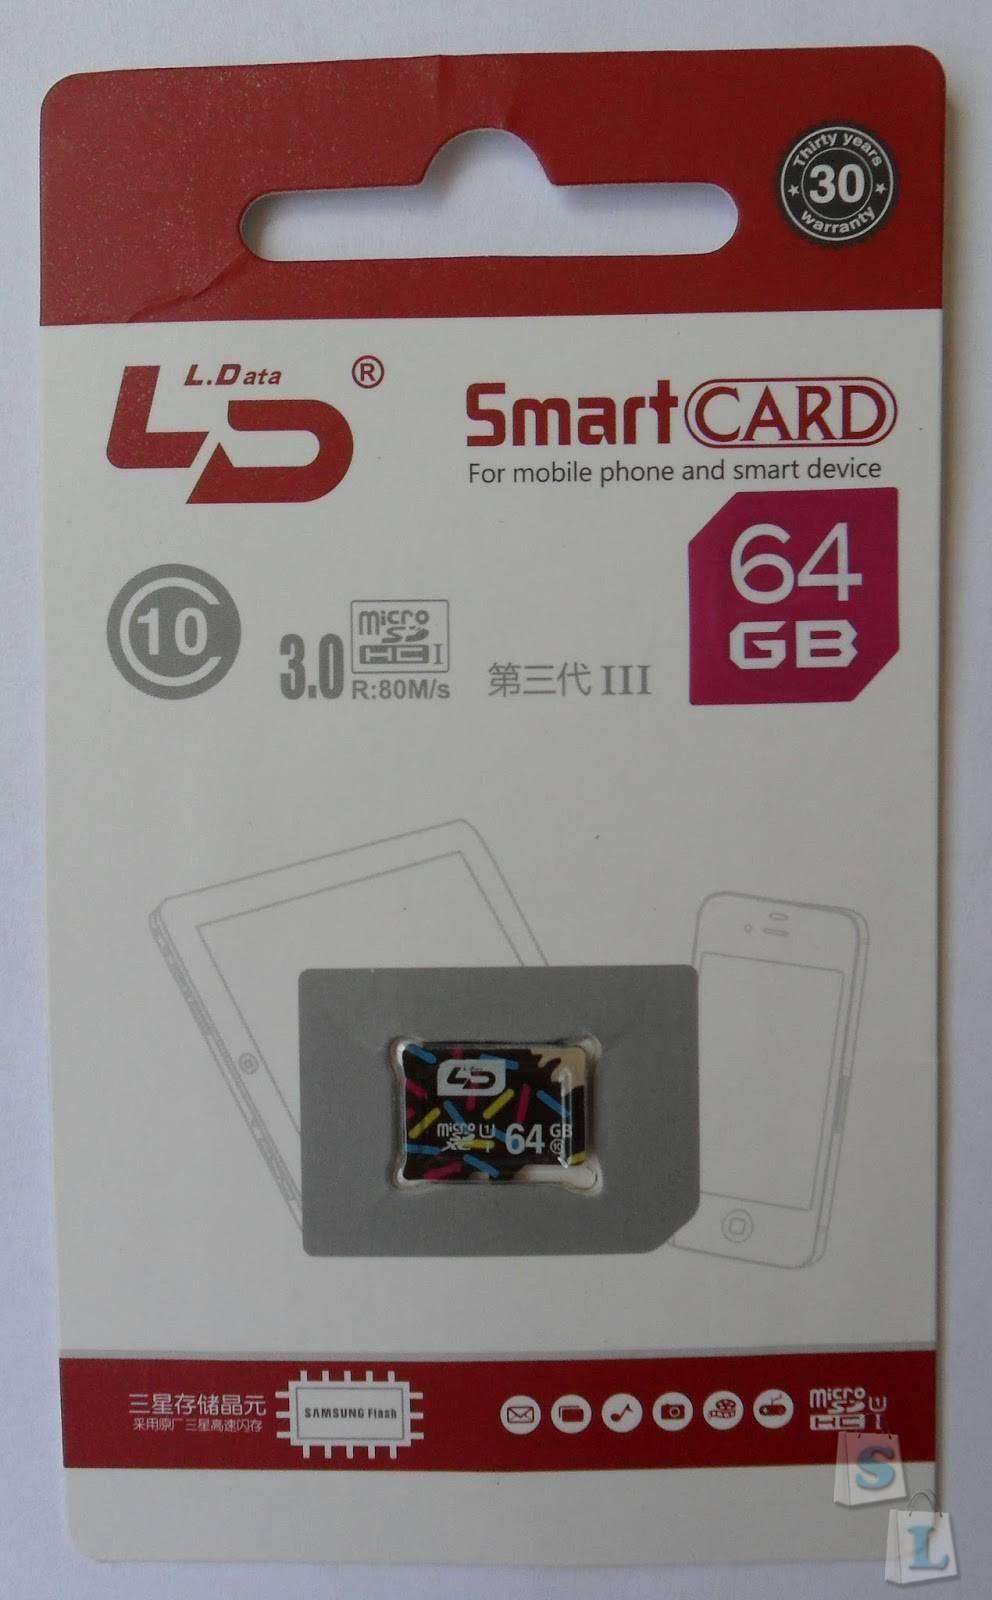 Aliexpress: Micro SD карта 10 класса на 64 Гб от LD